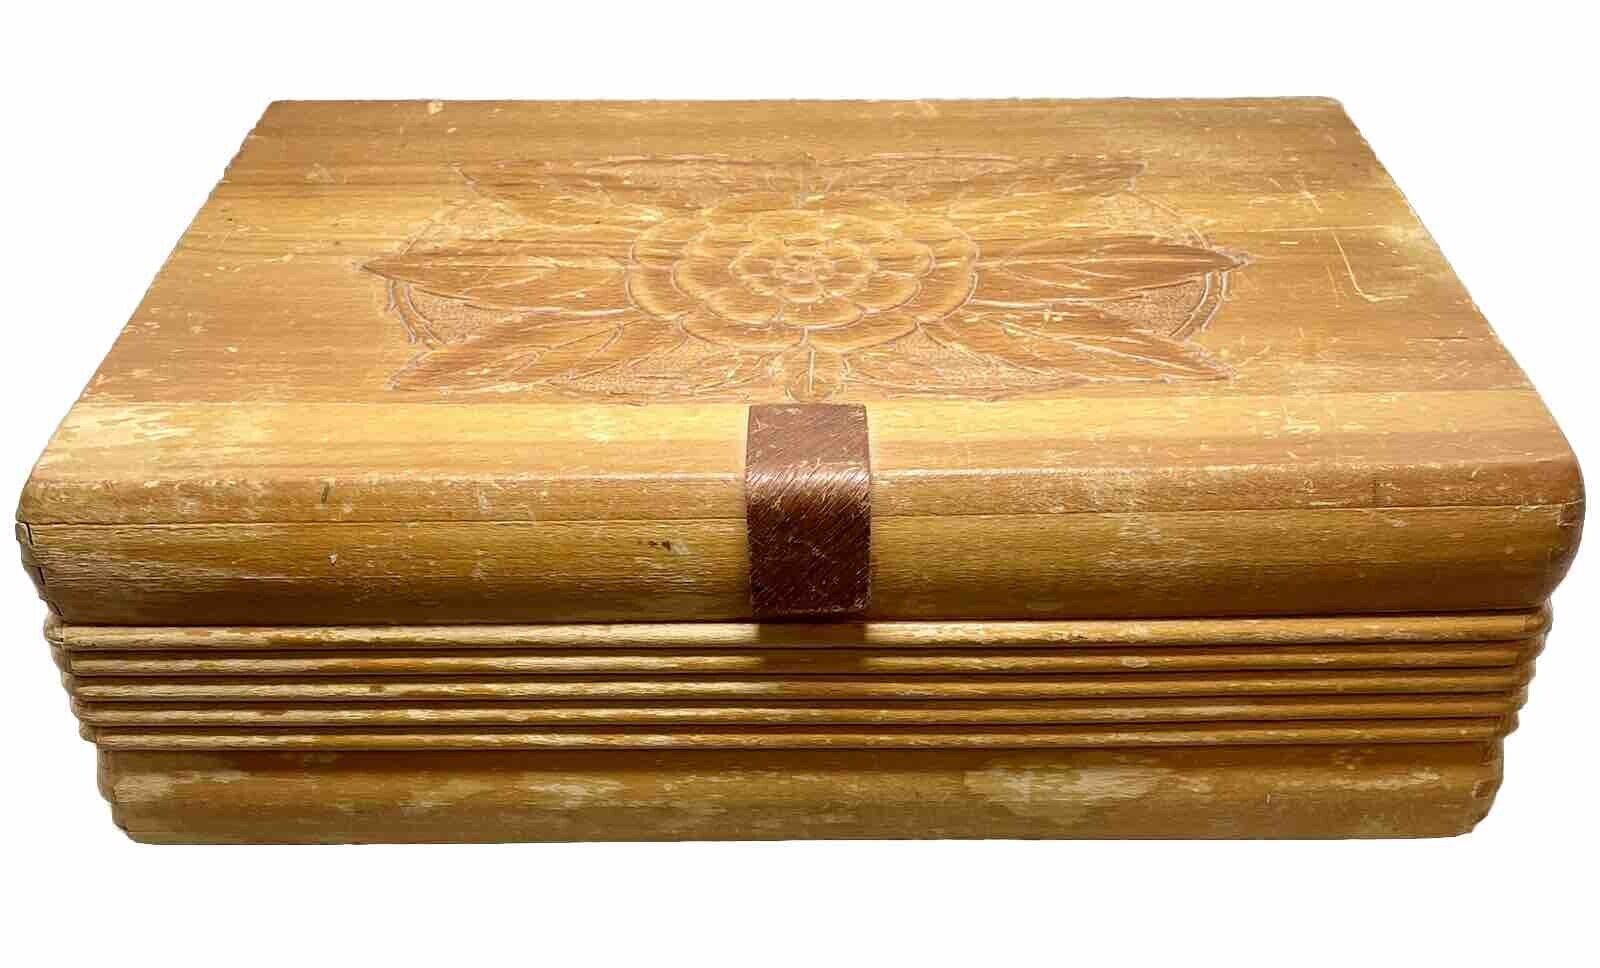 Vintage hand carved wooden box vintage With  Top Floral Crafted Design .